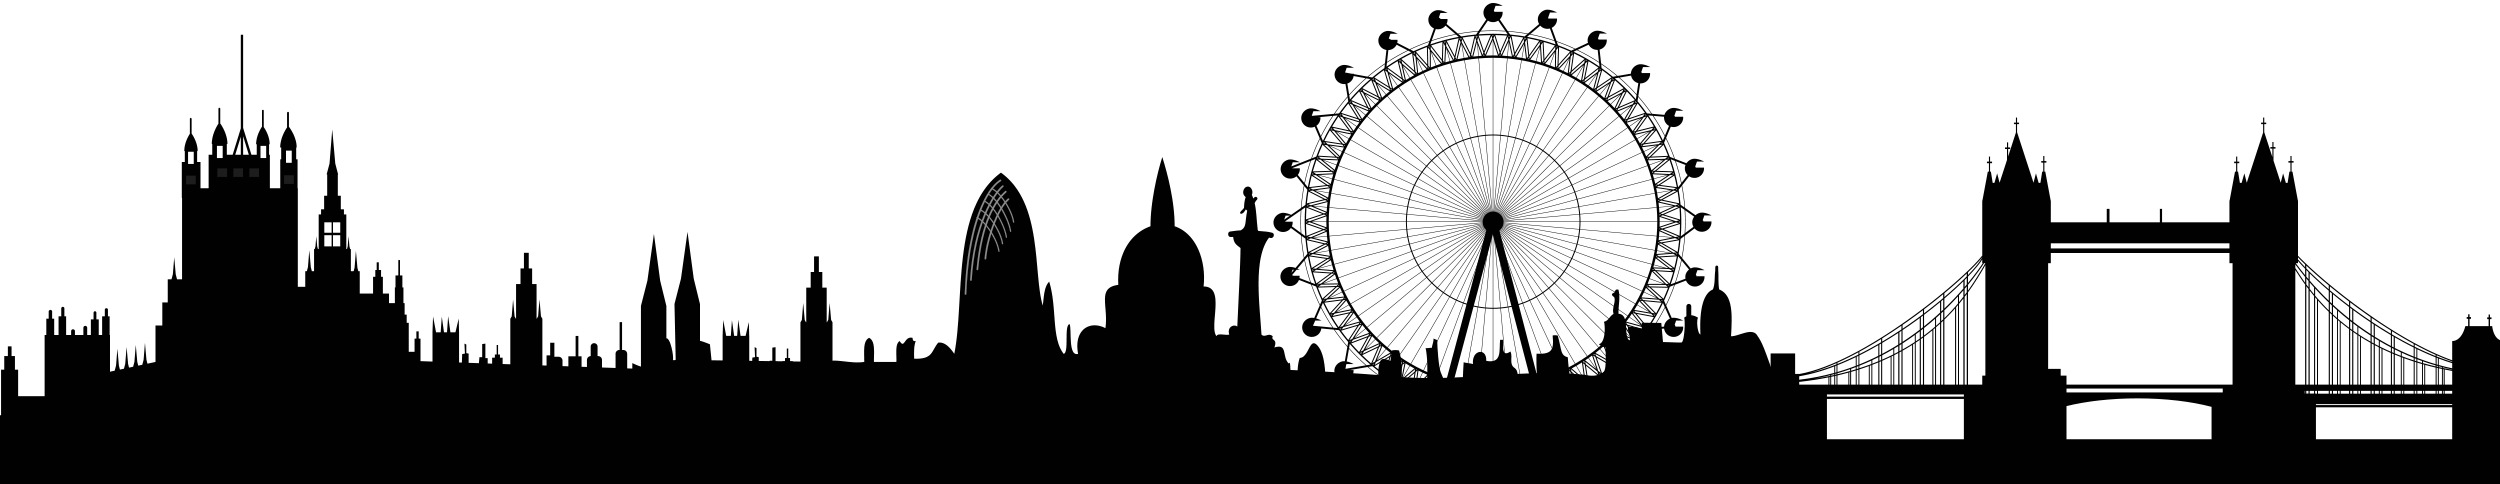 London Landmarks Skyline icons